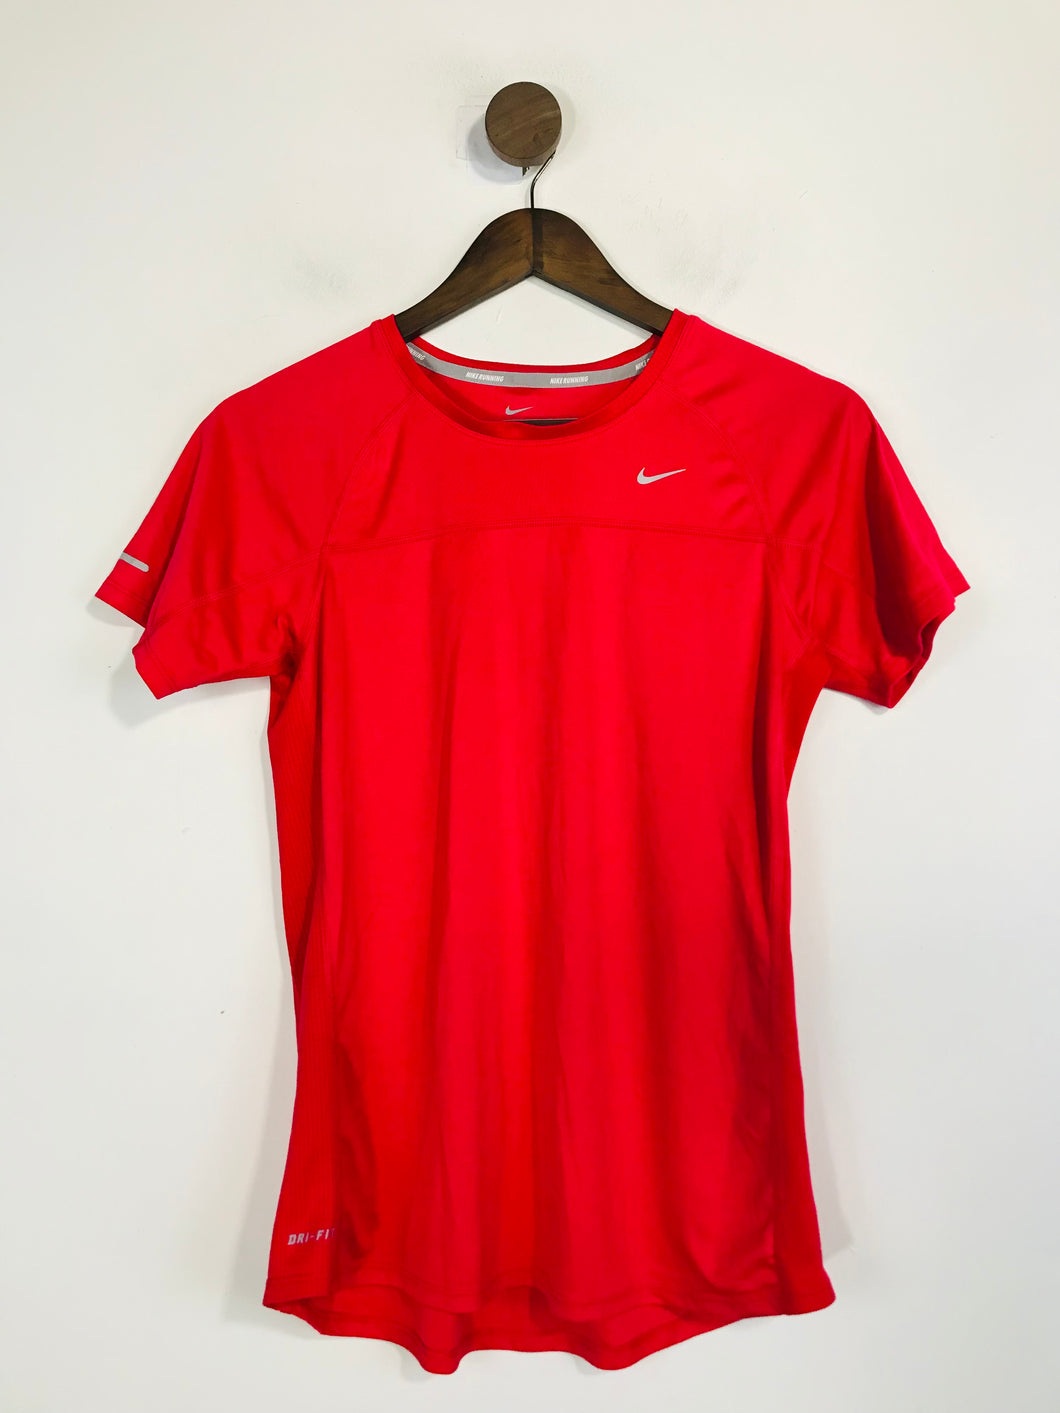 Nike Women's Gym Running Short Sleeve Sports Top | M UK10-12 | Pink